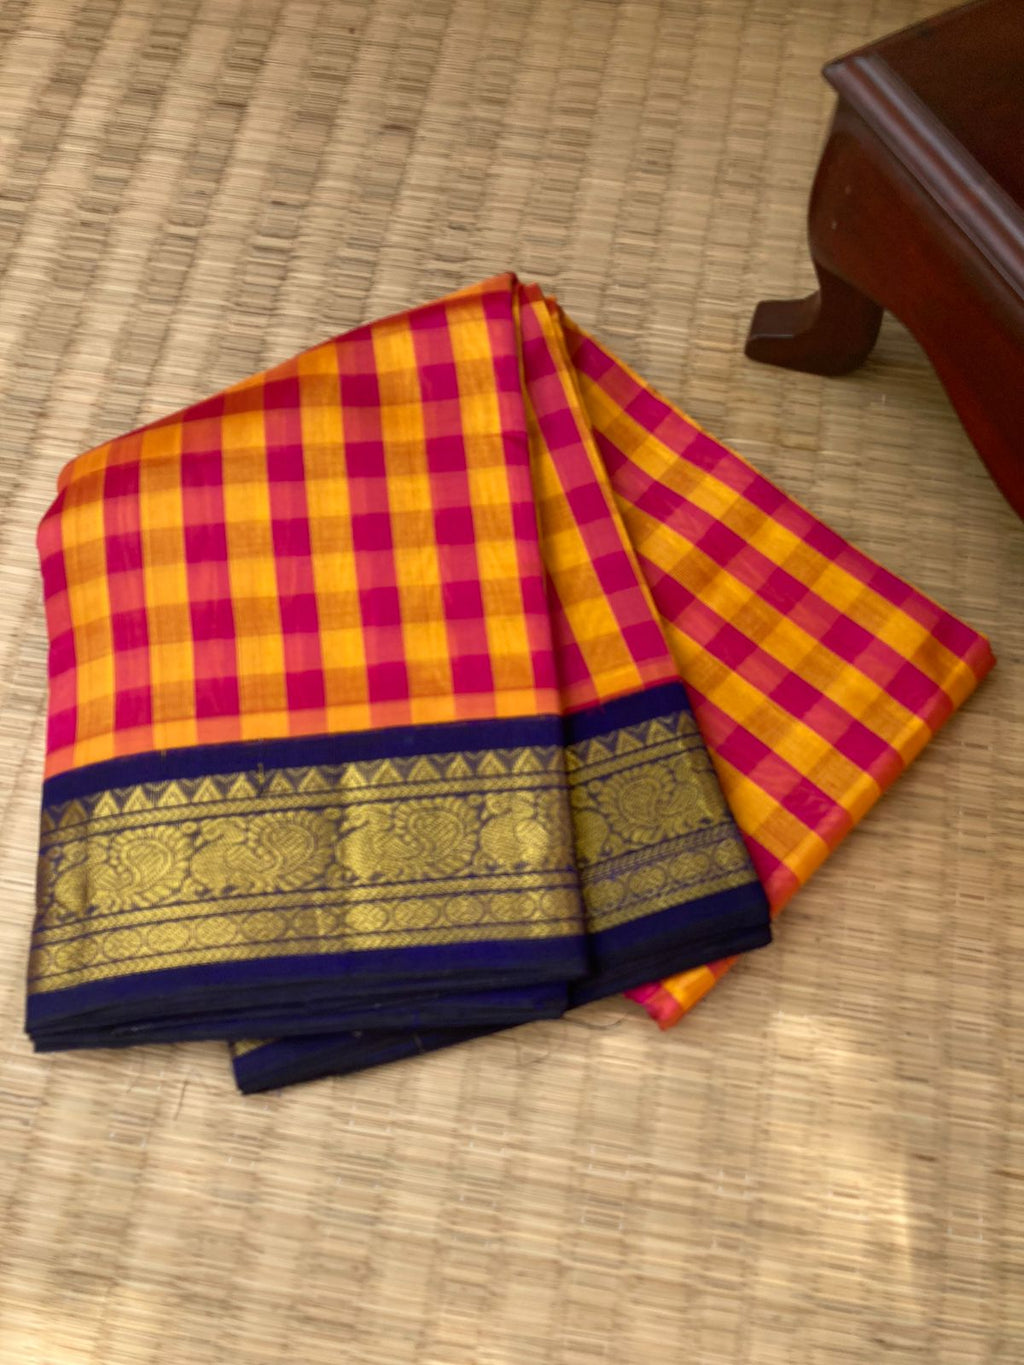 Paalum Palamum Kattams Korvai Silk Cottons - mustard and pink with navy blue